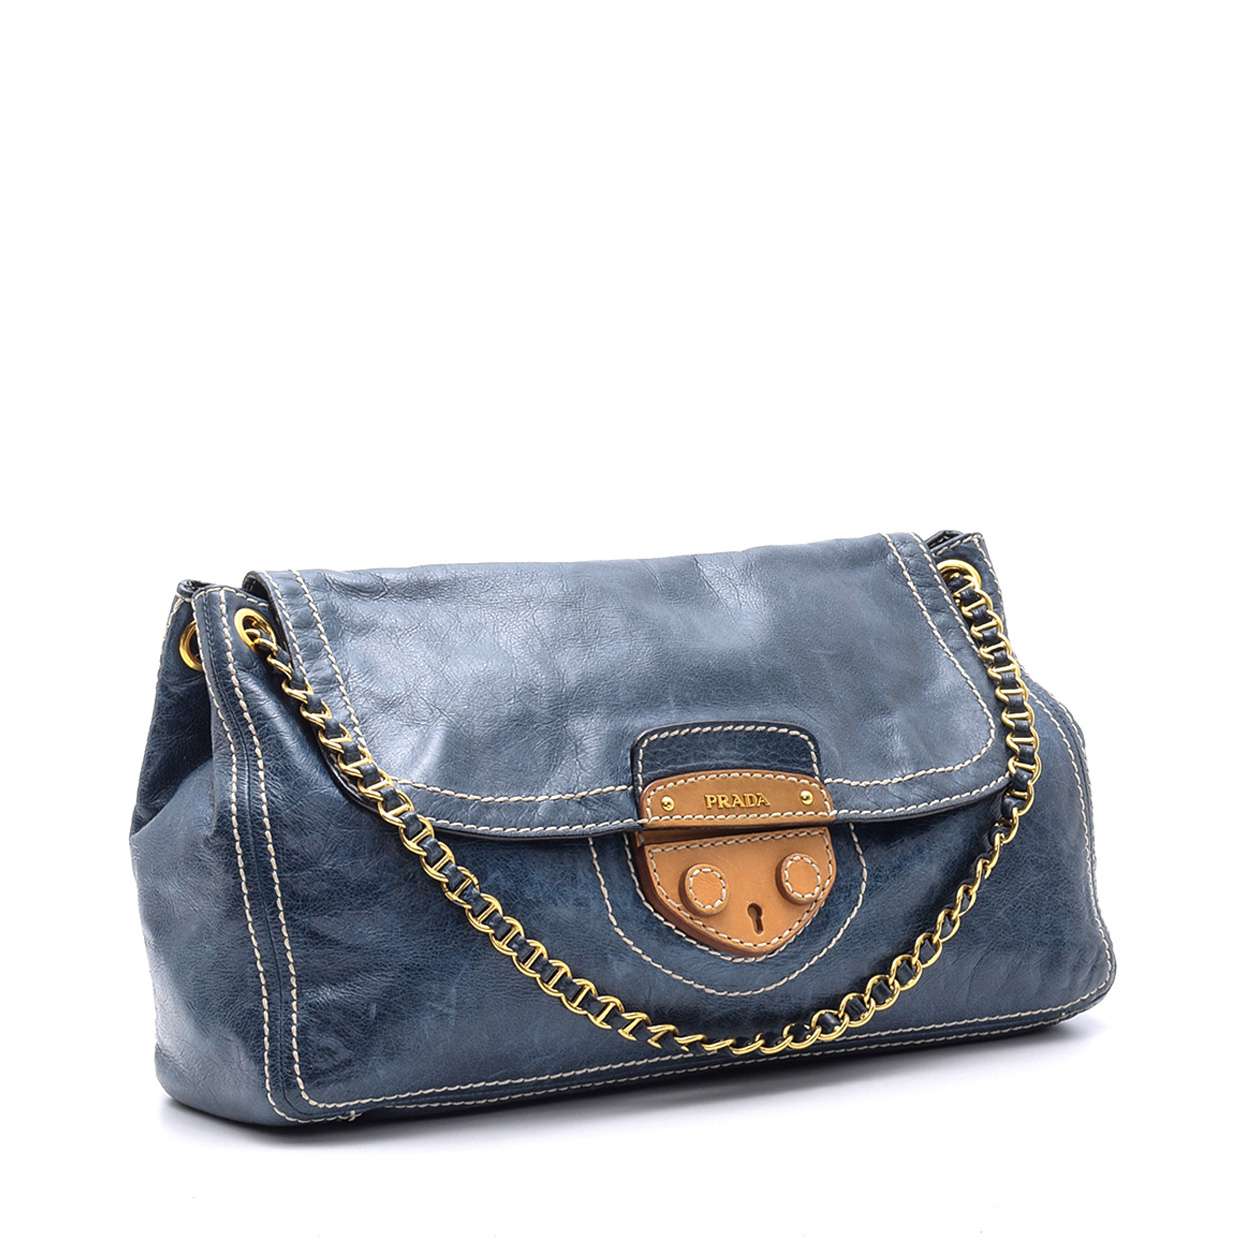 Prada -  Blue Lambskin Leather Chain Shoulder Bag 